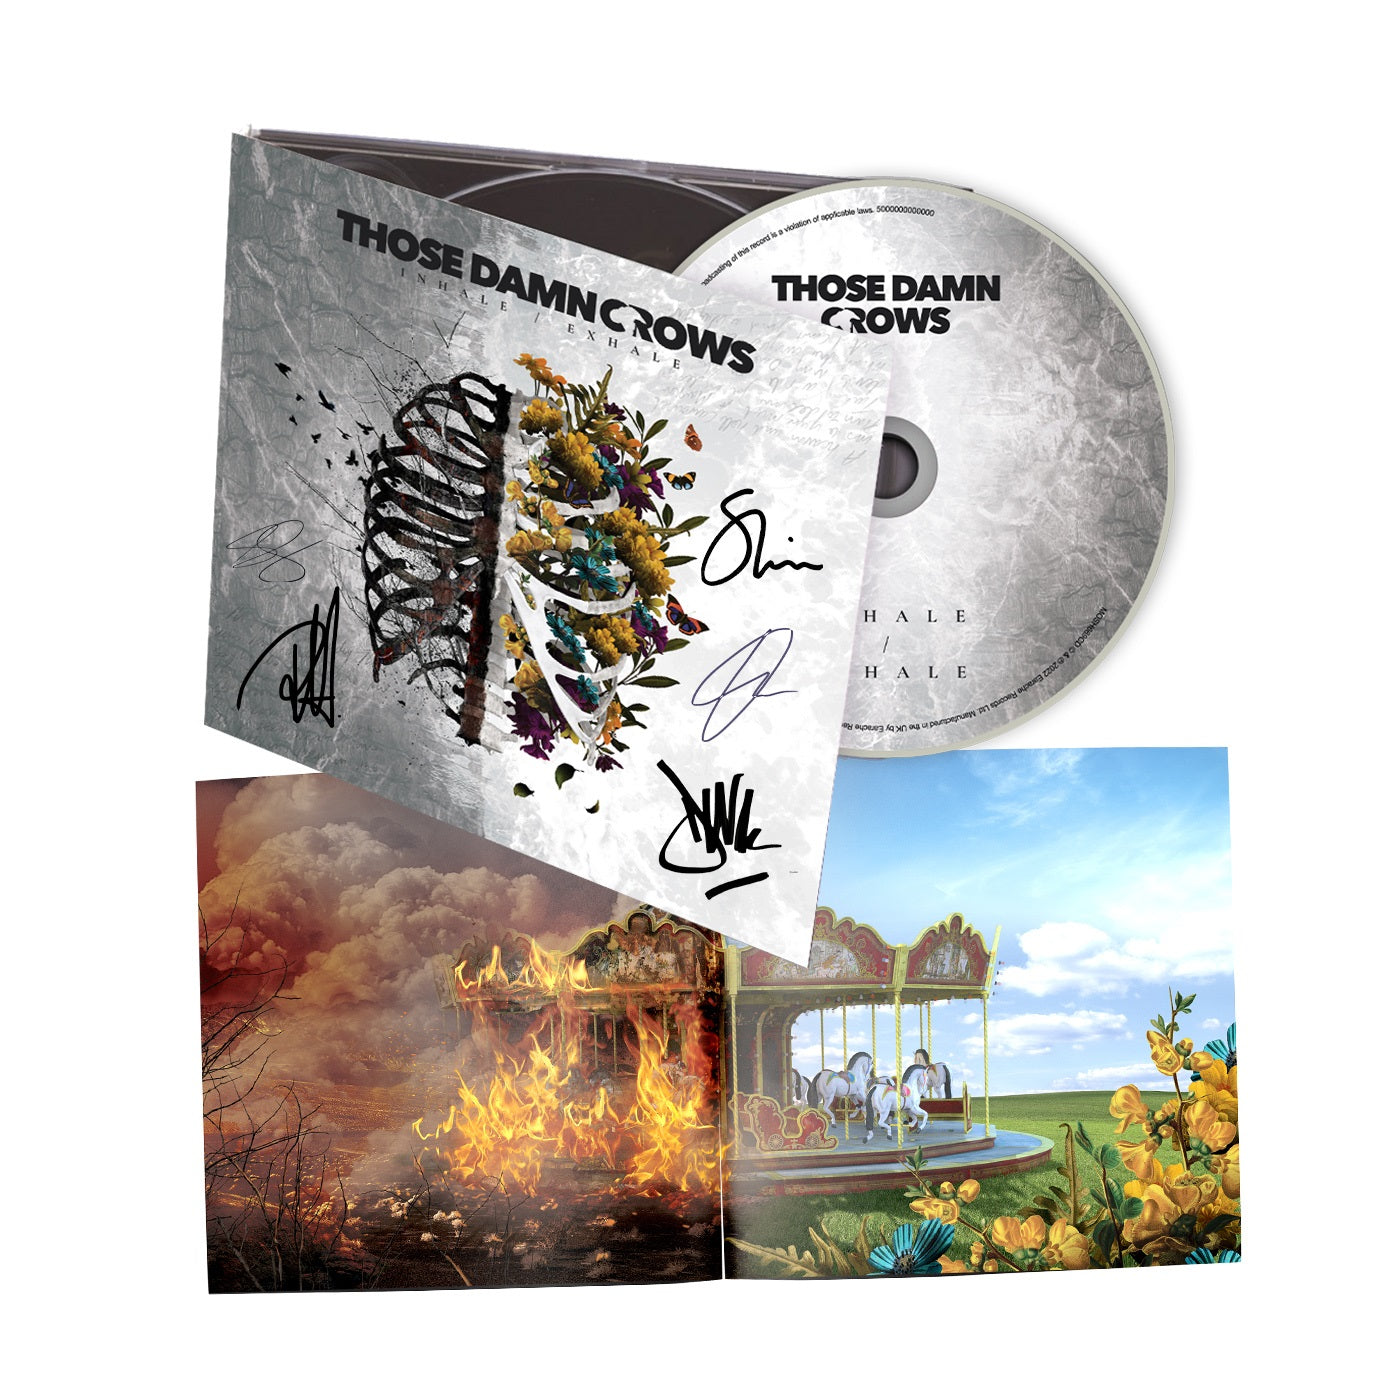 Those Damn Crows "Inhale/Exhale" Signed Digipak CD w/ 2 Bonus Tracks